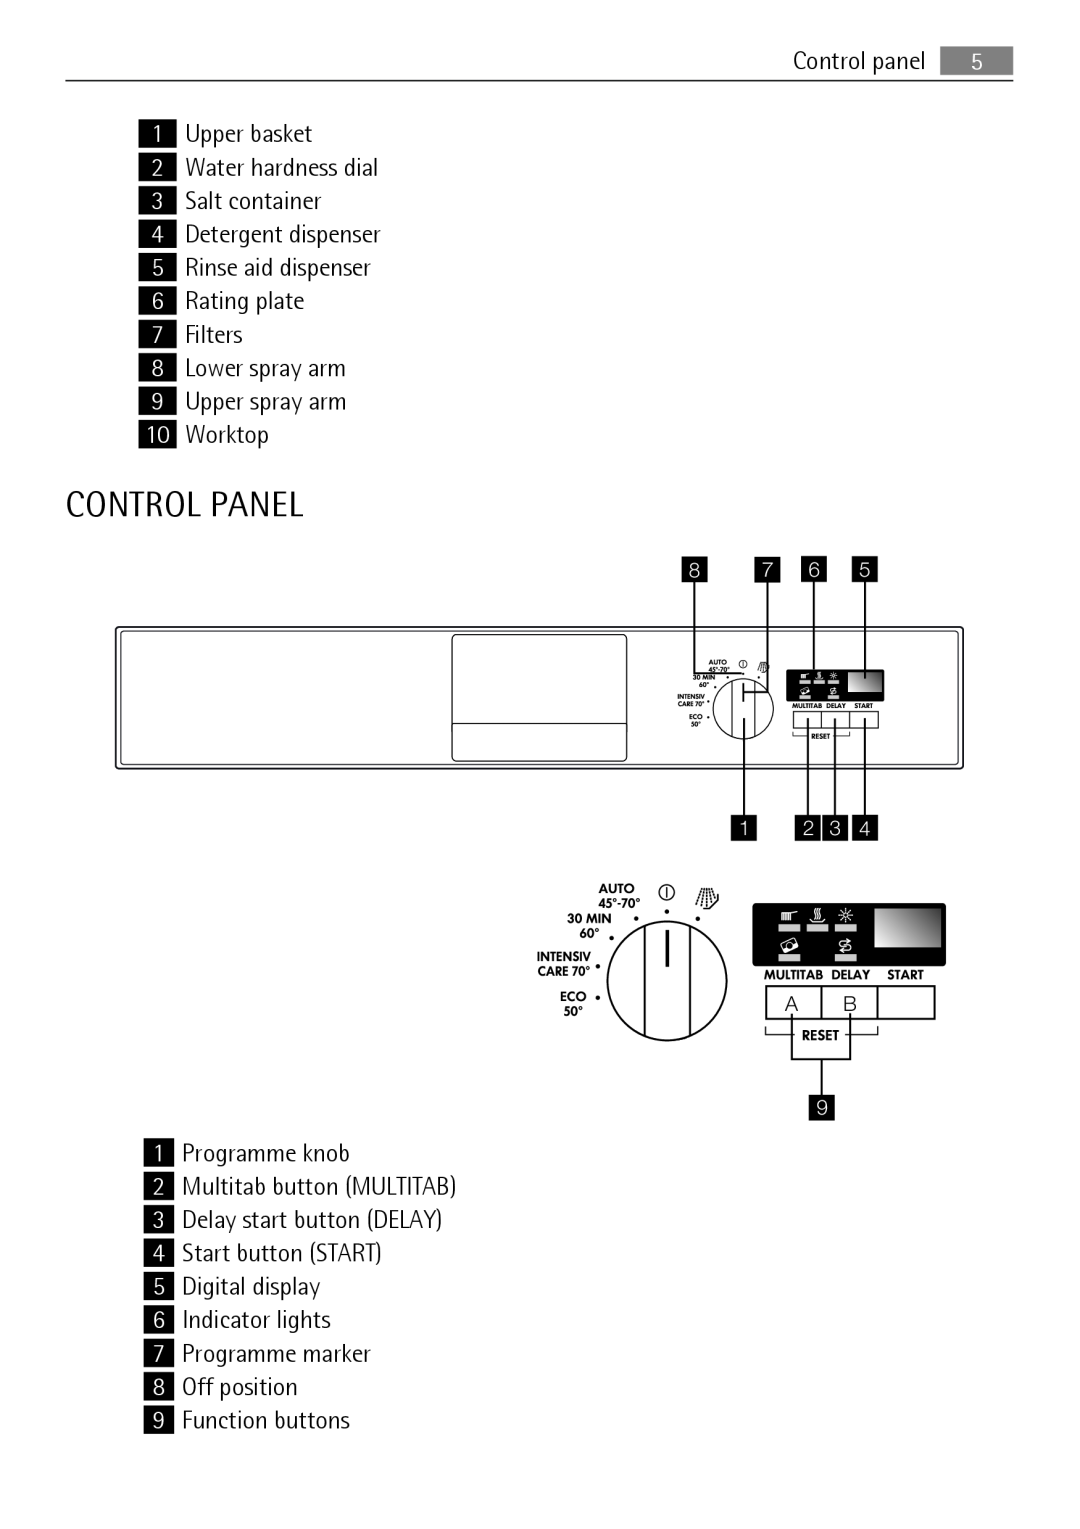 AEG 45003 Control Panel, Control panel, 1Upper basket 2Water hardness dial, 3Salt container 4Detergent dispenser 